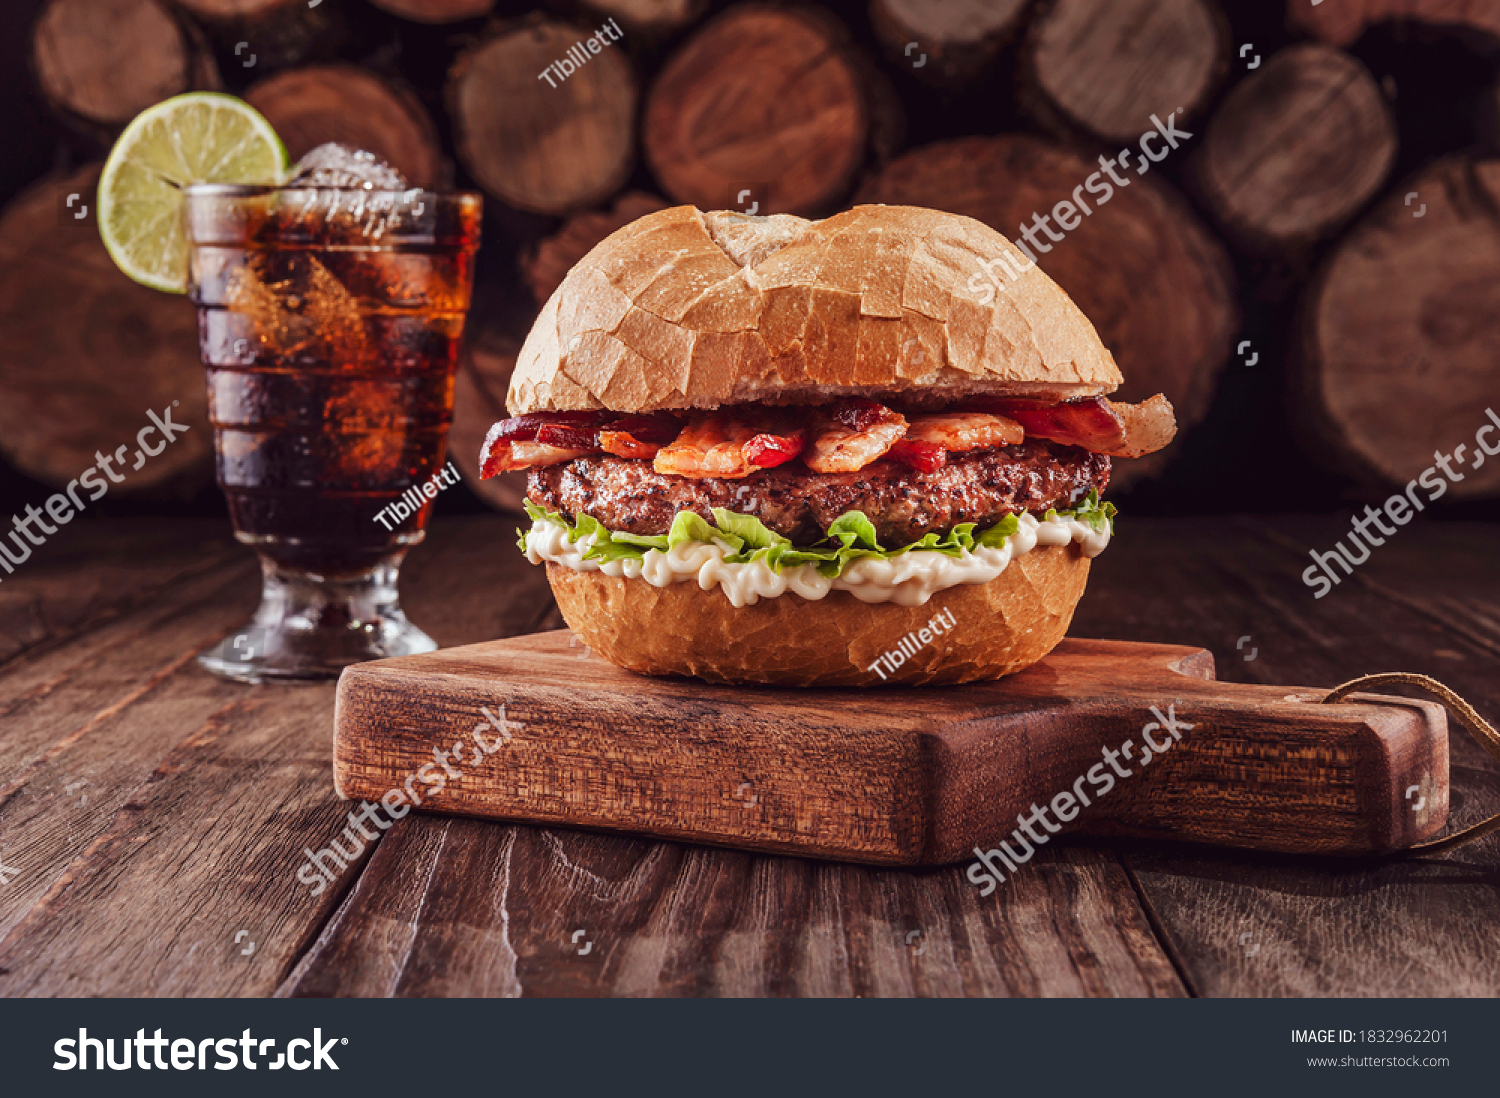 Firewood burger